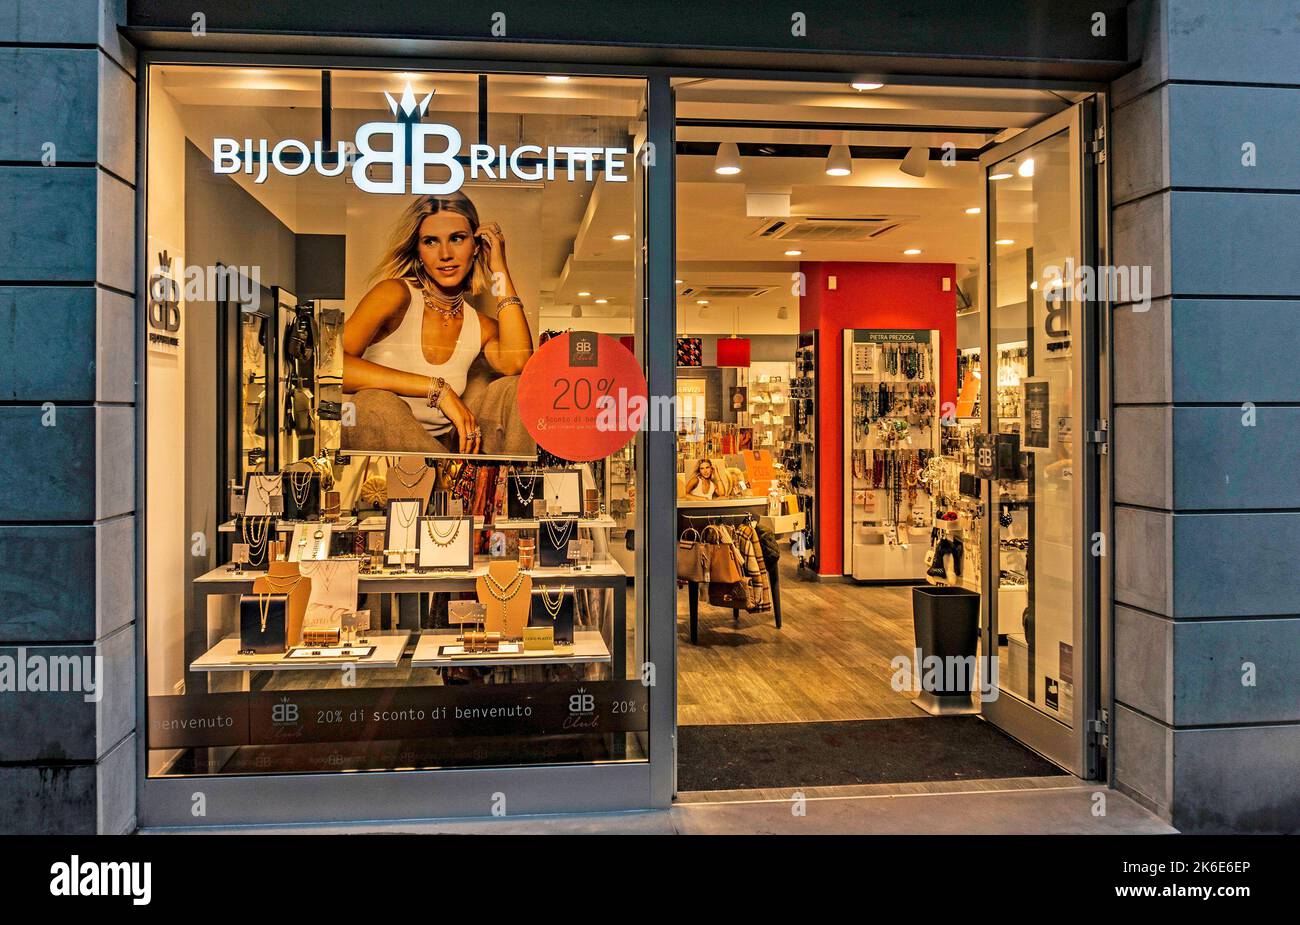 A Bijou Brigette clothing accessory store on Via Roma, Lecco, Italy. Stock Photo